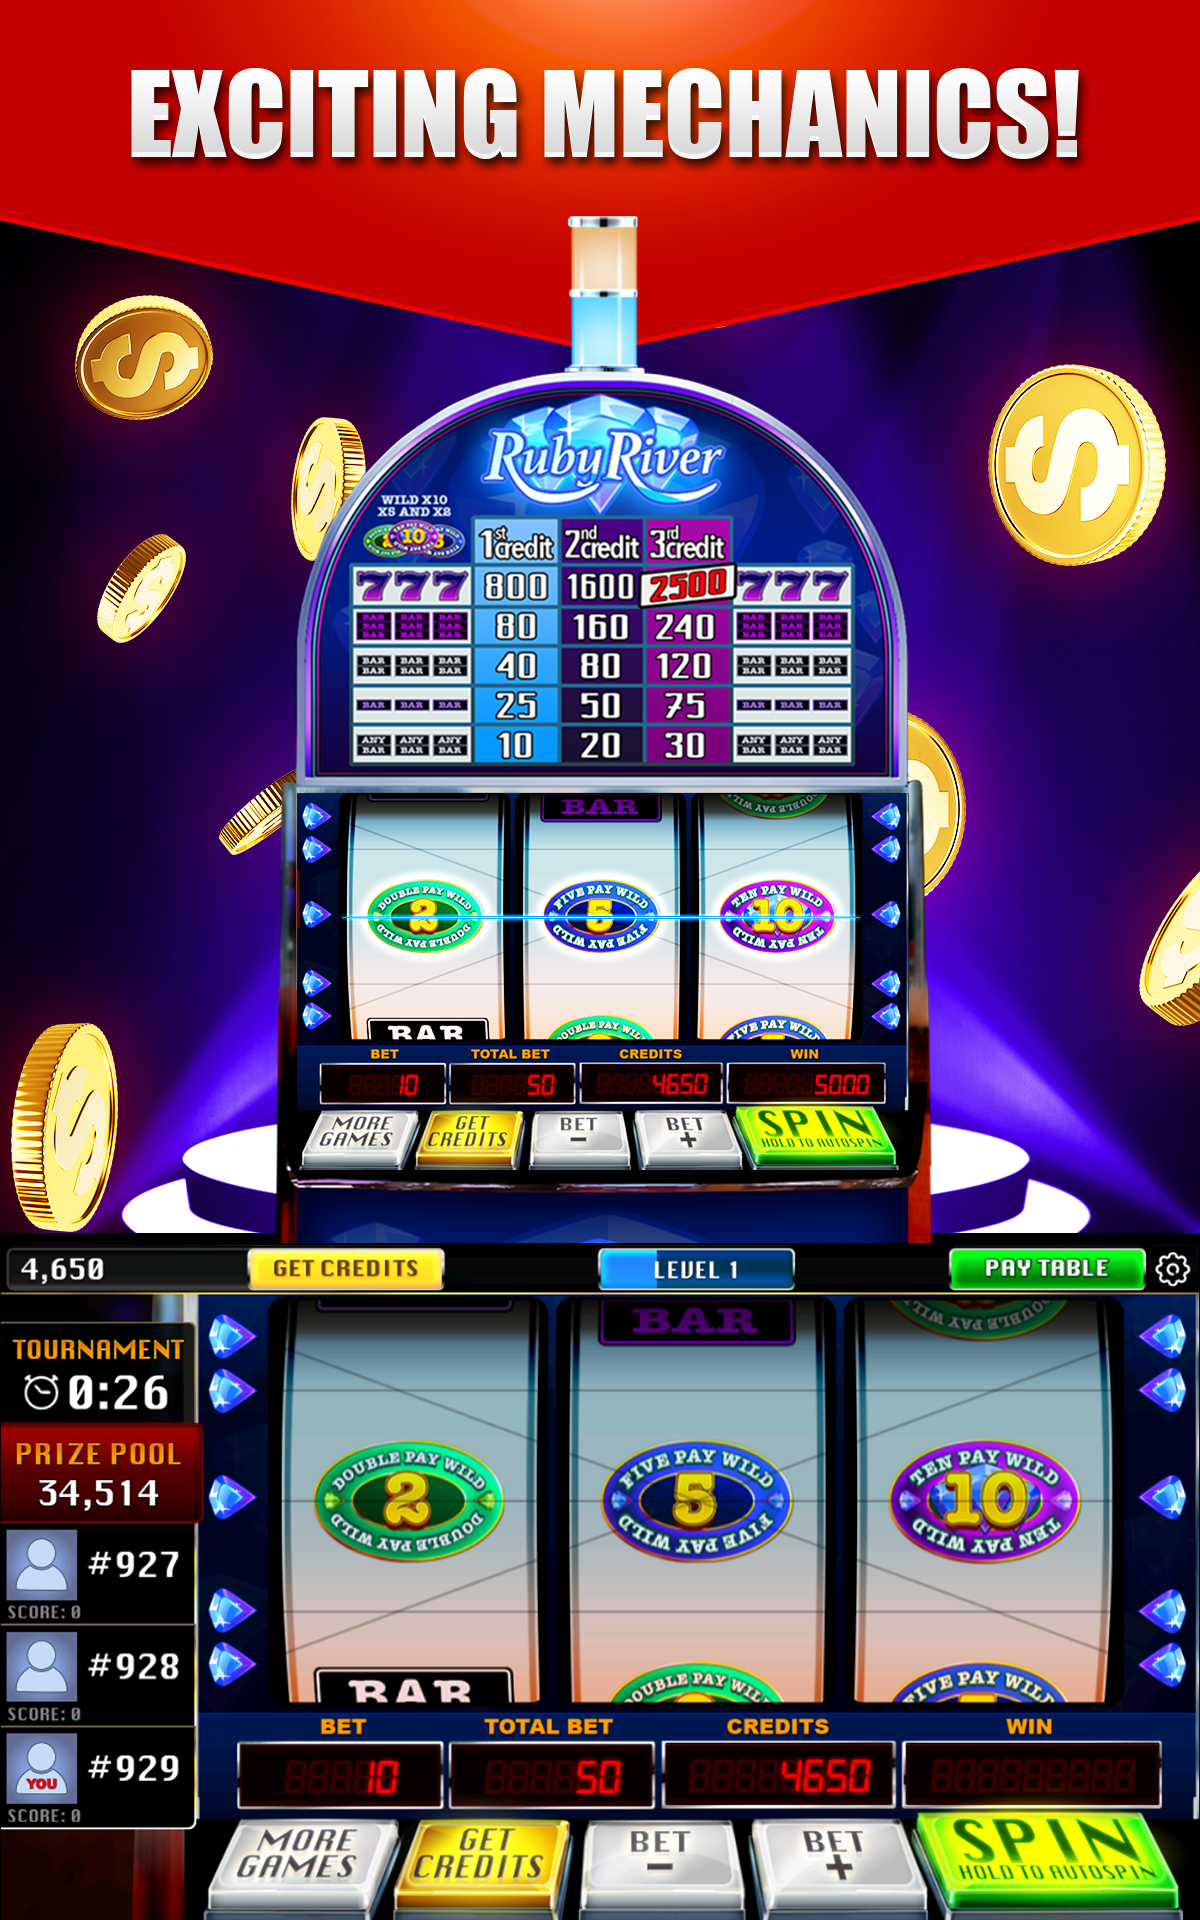 Vegas Slots Online